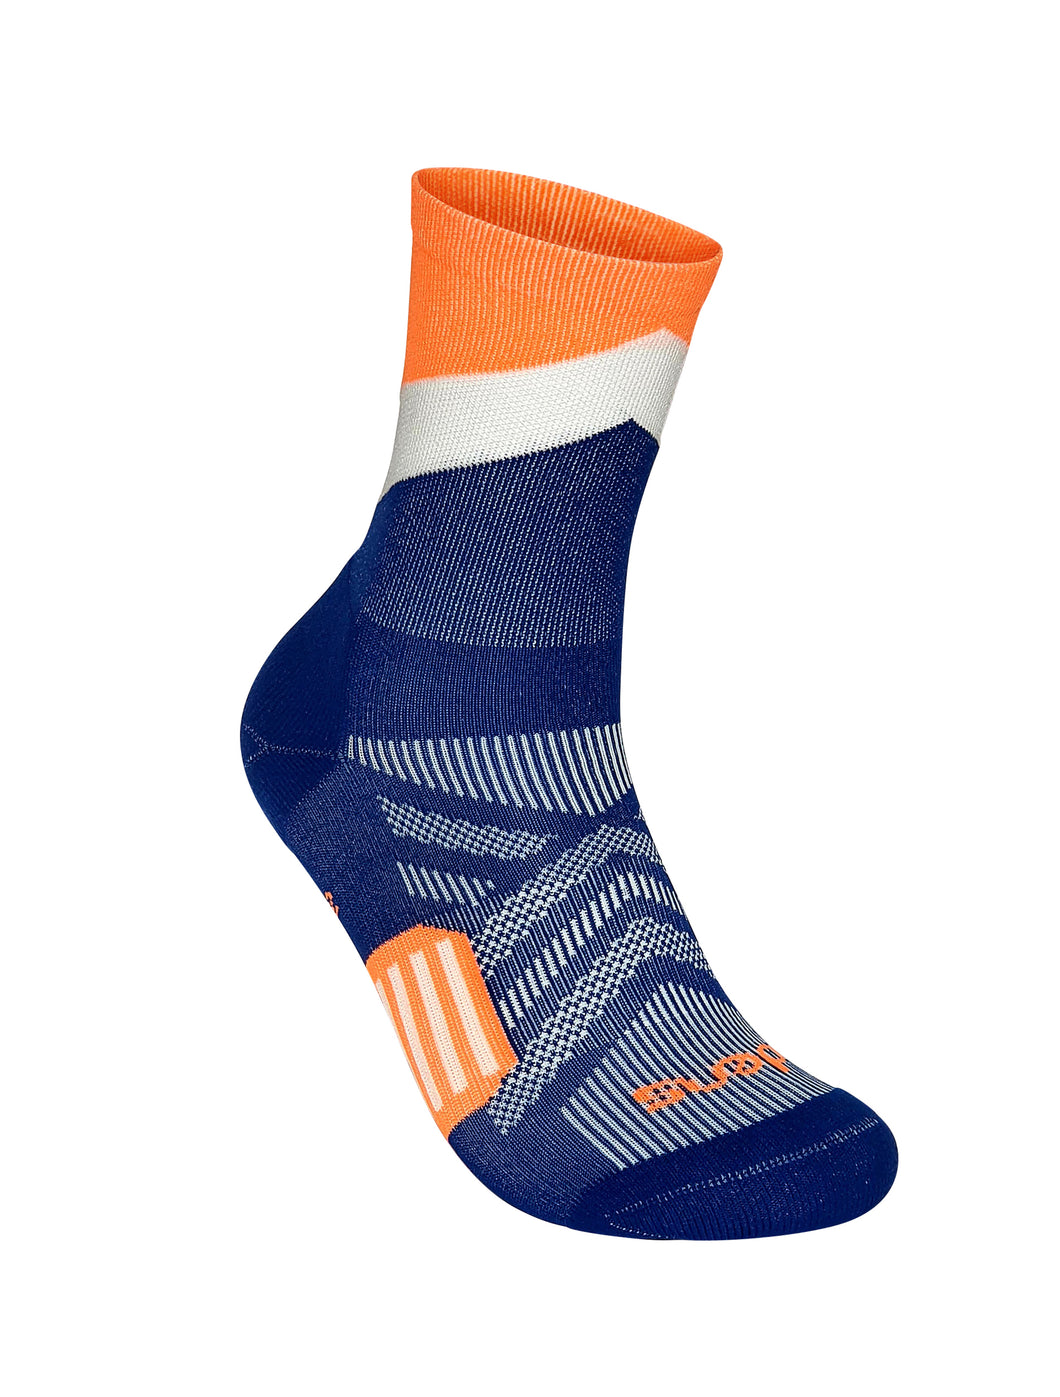 Slope Orange and Blue Mini Crew Socks